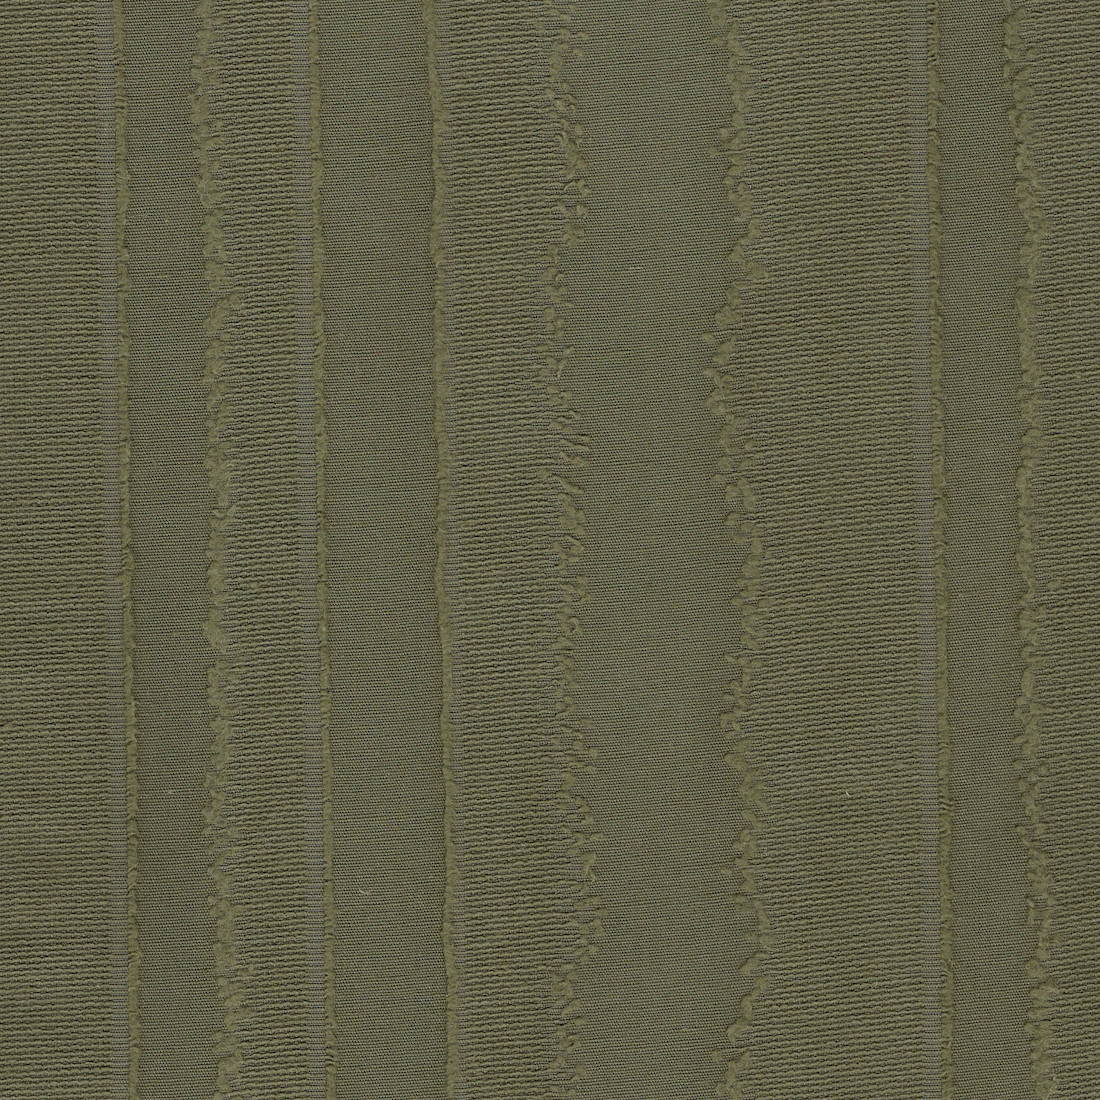 Medium Weight Cotton Fabric Jacquard Fancy Stripe in Army Green